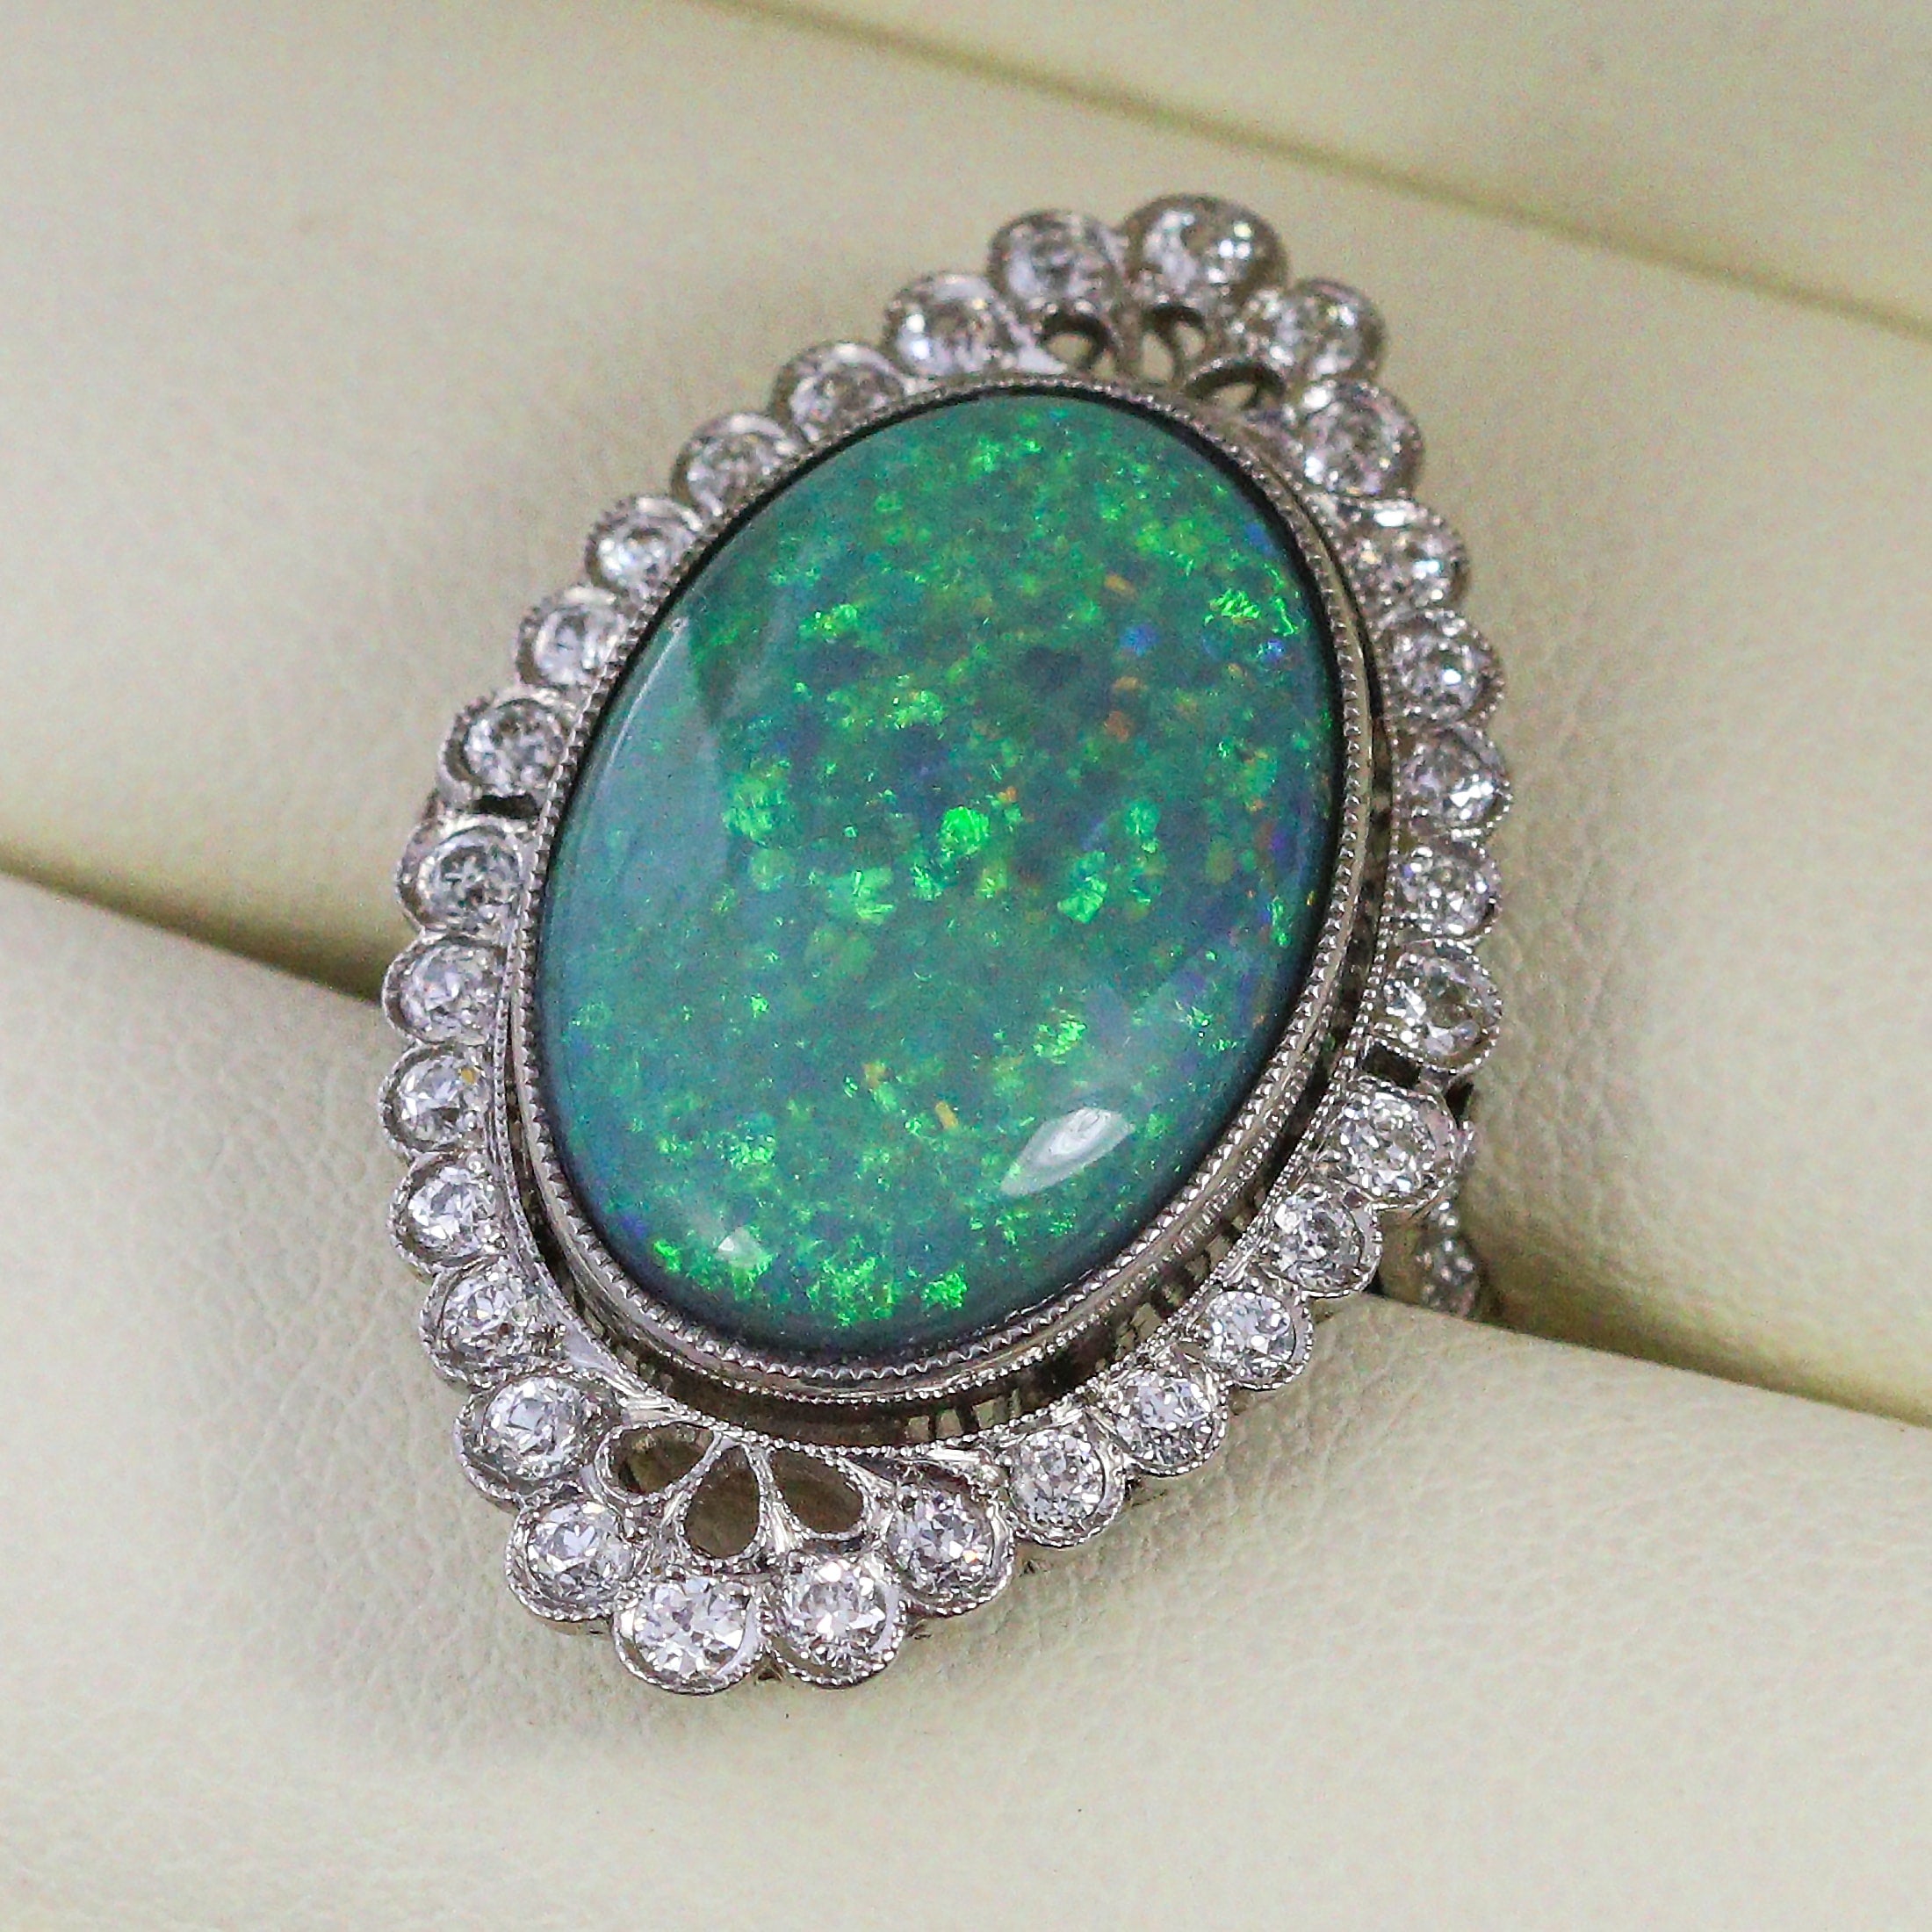 Black opal and diamond custom ring.